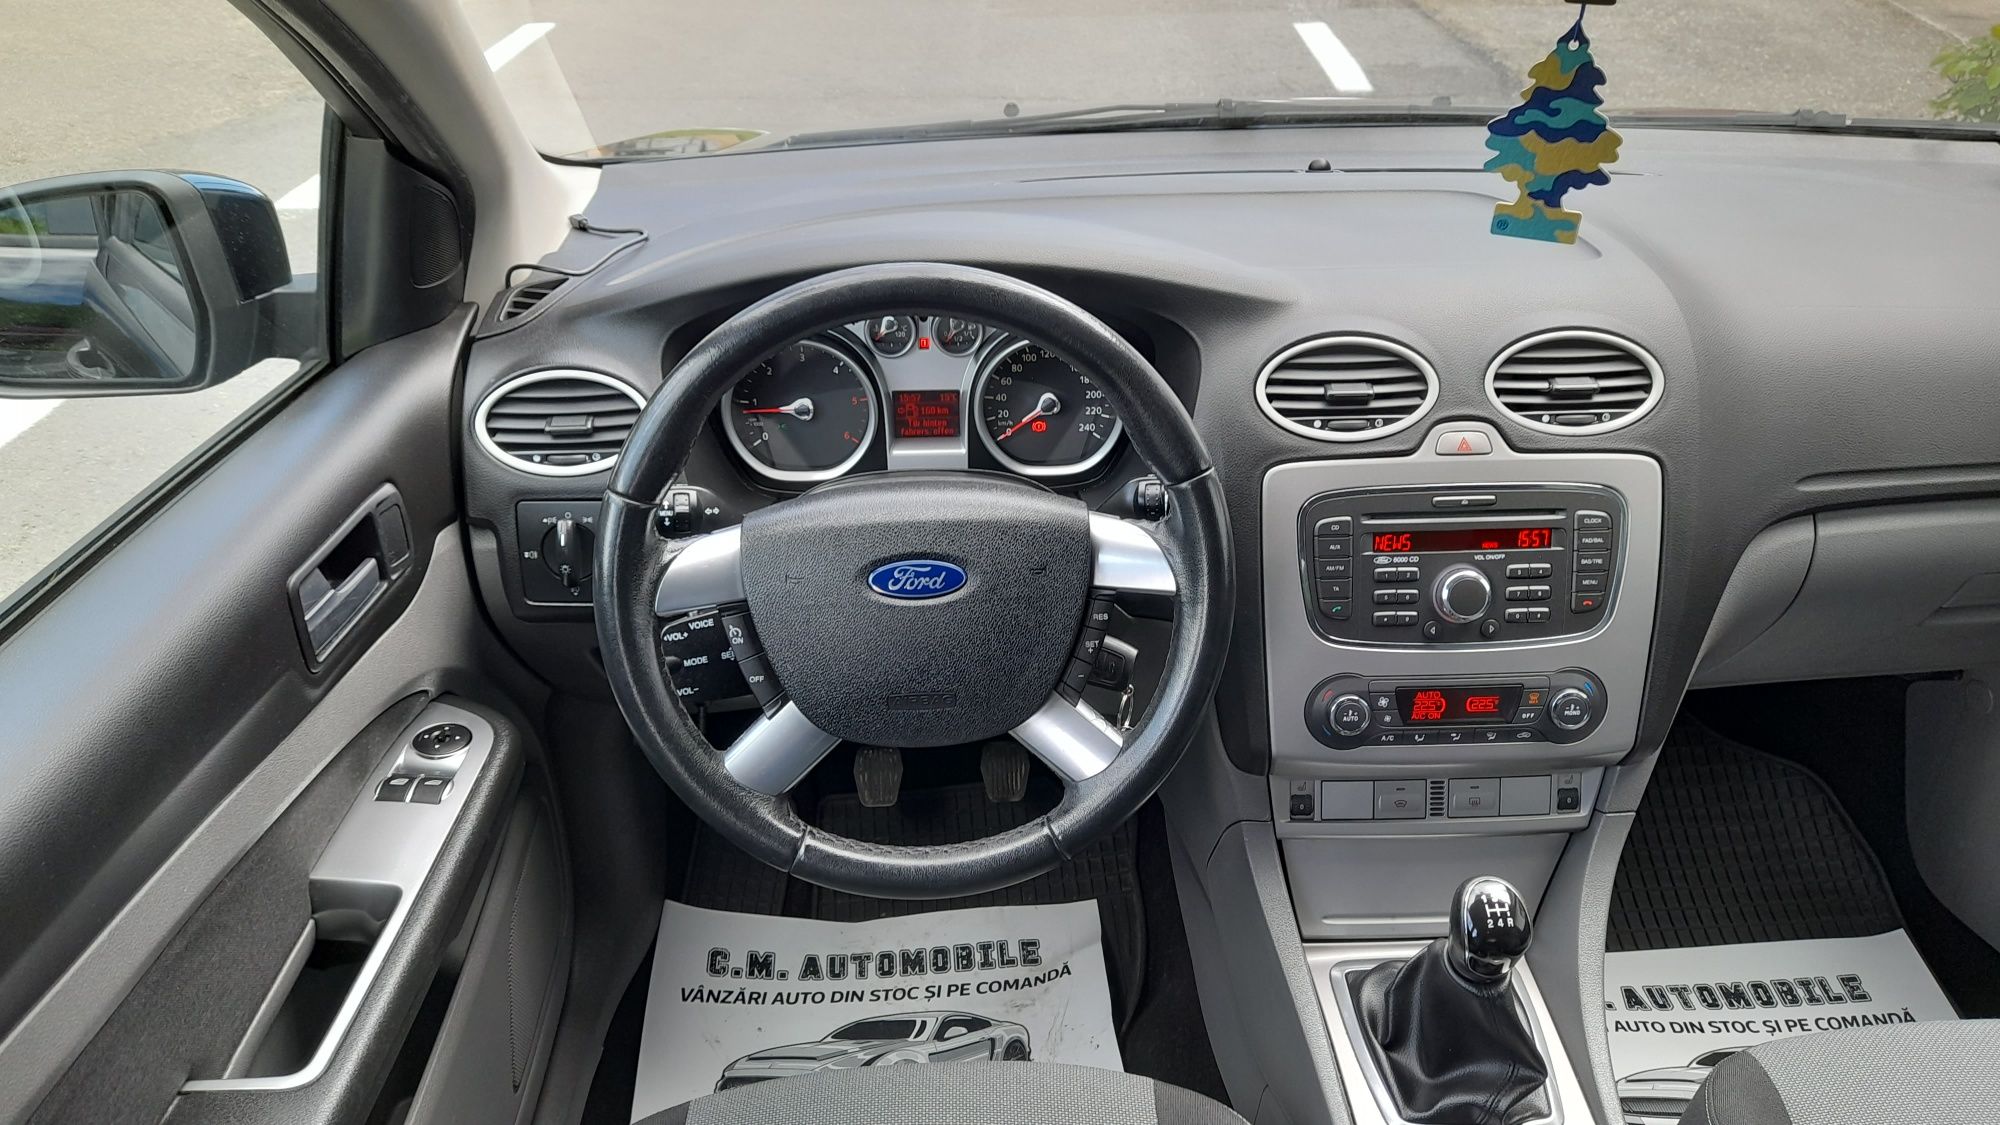 Ford Focus 1.6 diesel Euro 5/ Alu/Climatronic